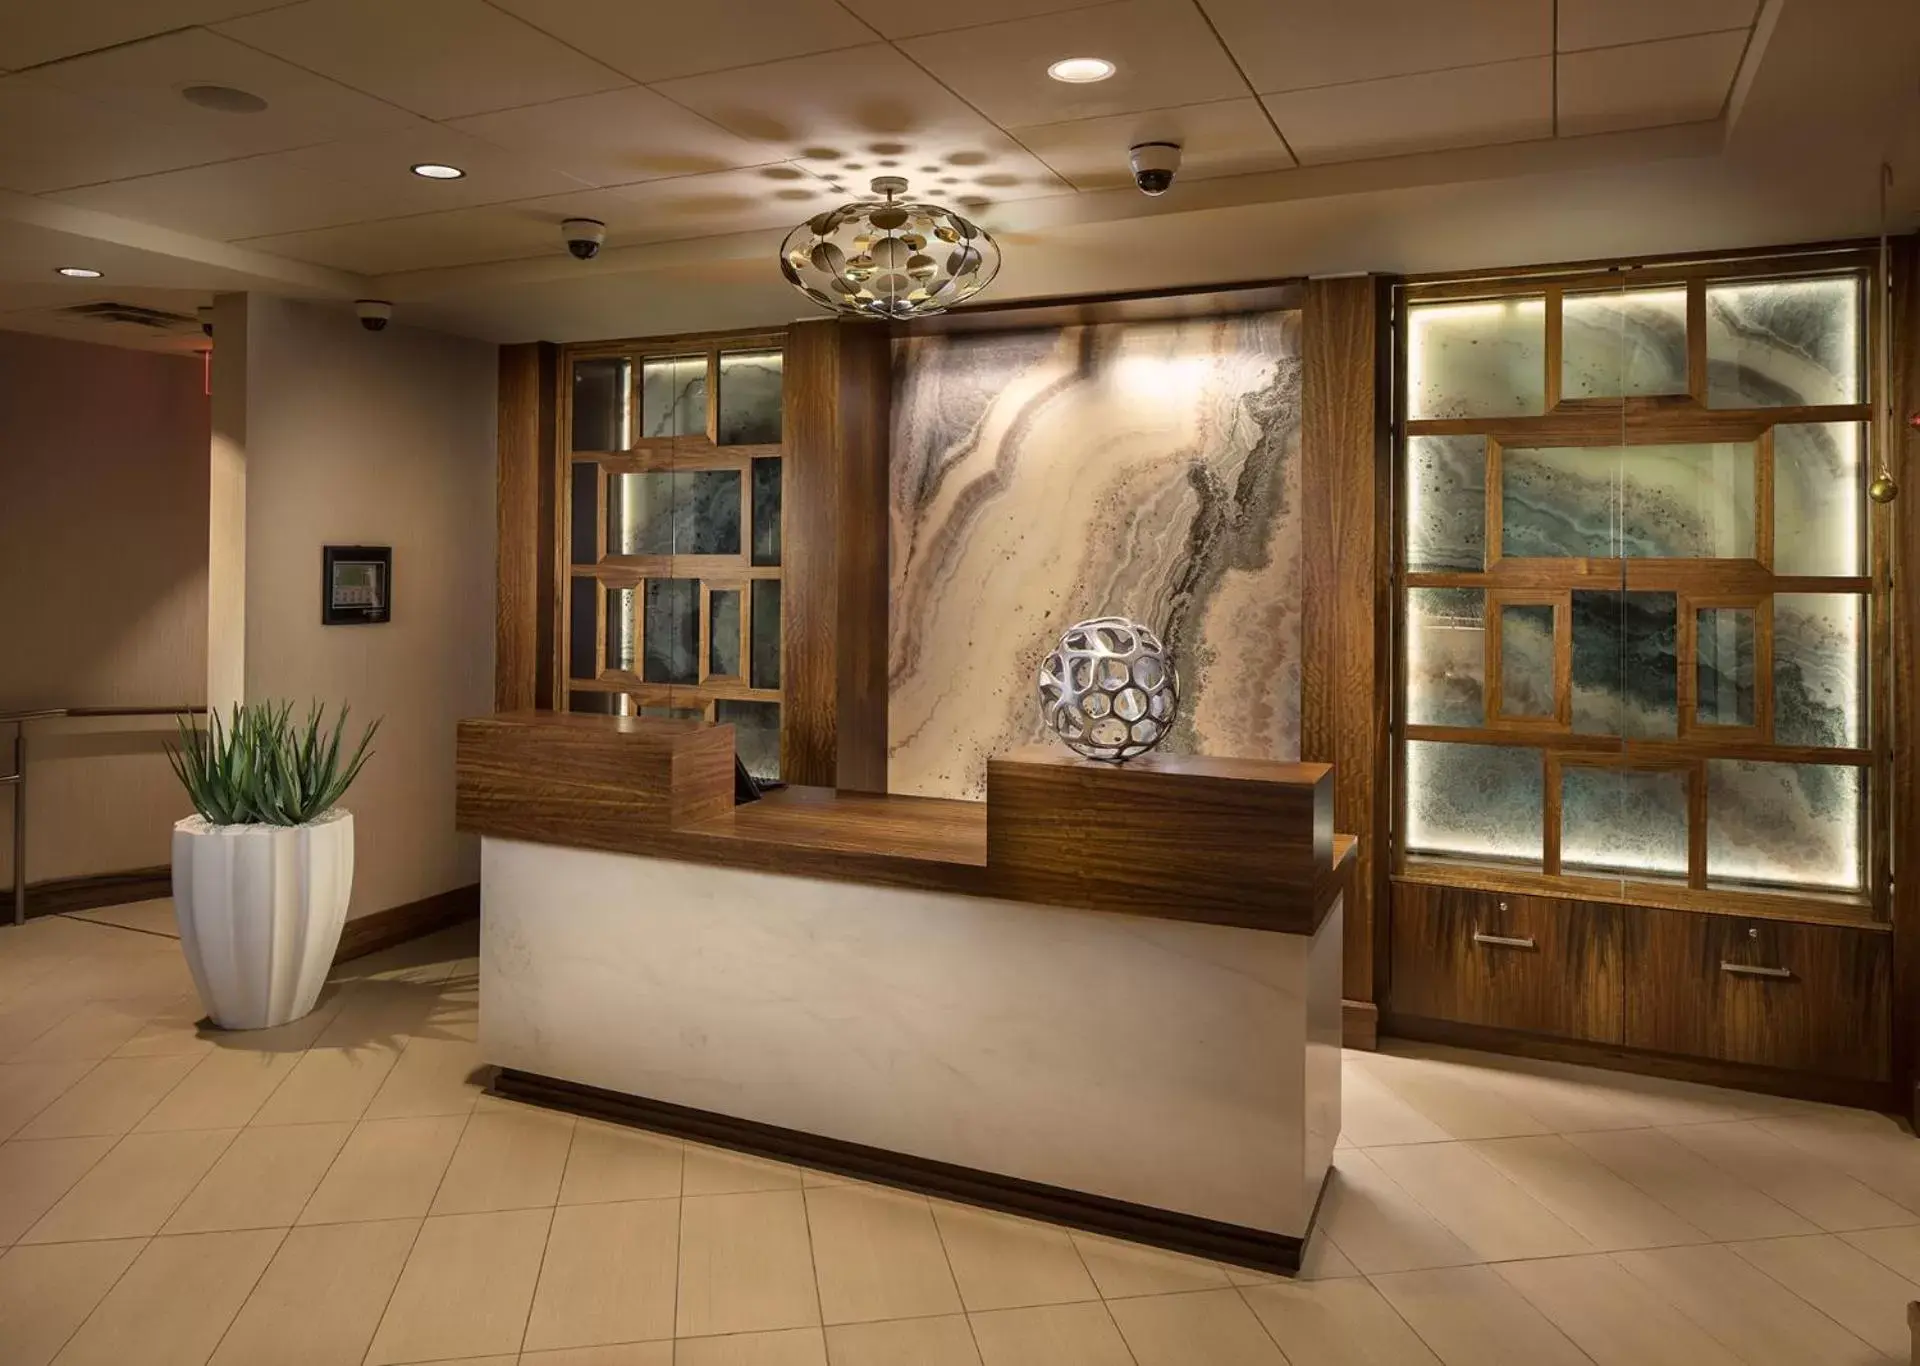 Lobby or reception, Lobby/Reception in Choctaw Casino & Resort, Durant